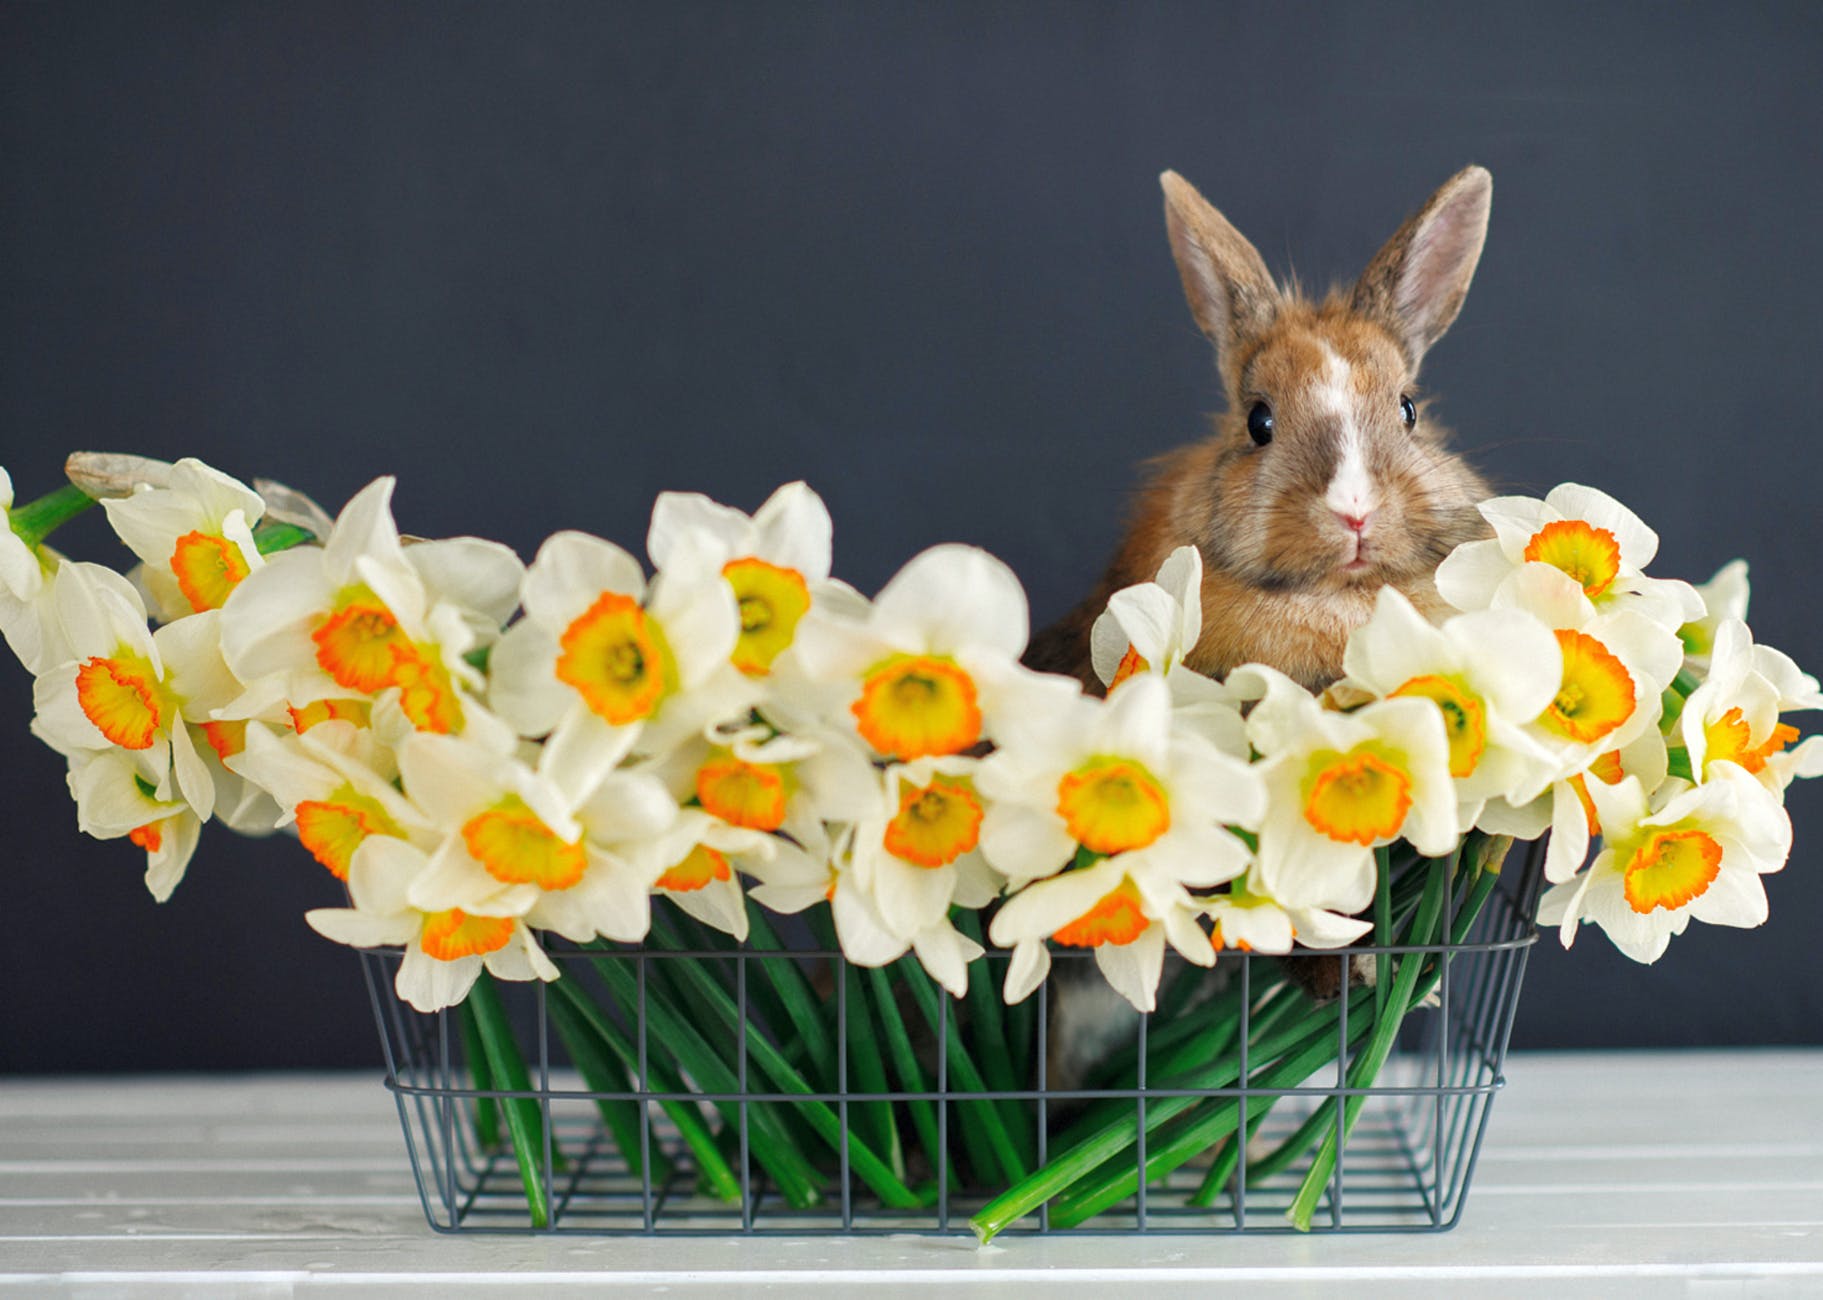 rabbit and flowers in metal basket